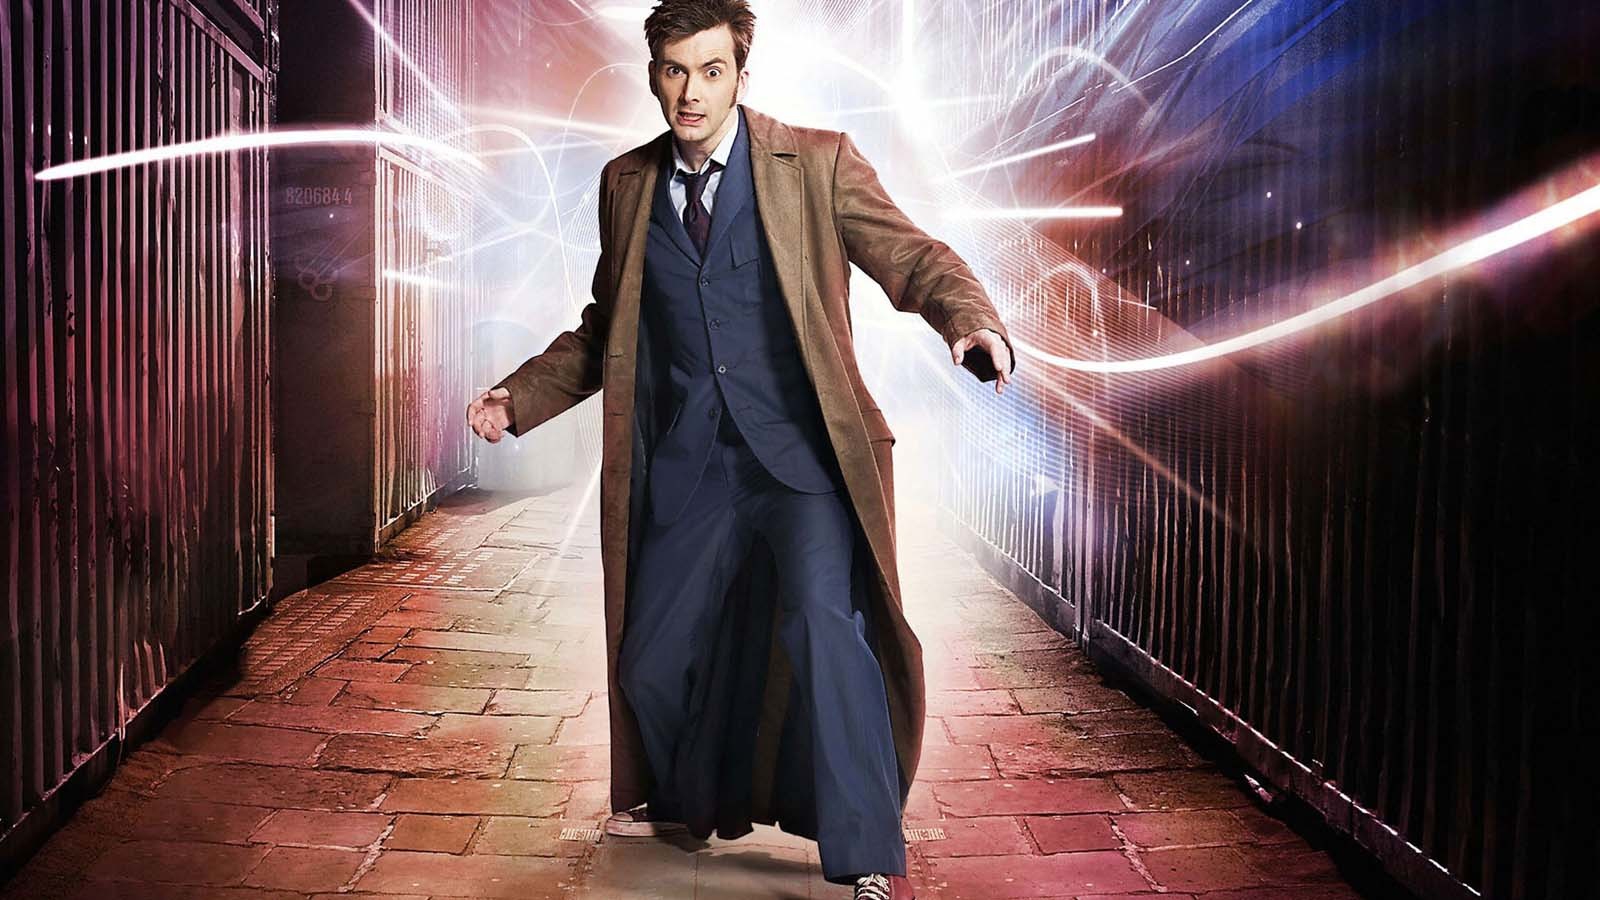 People 1600x900 Doctor Who David Tennant tie men TV series science fiction